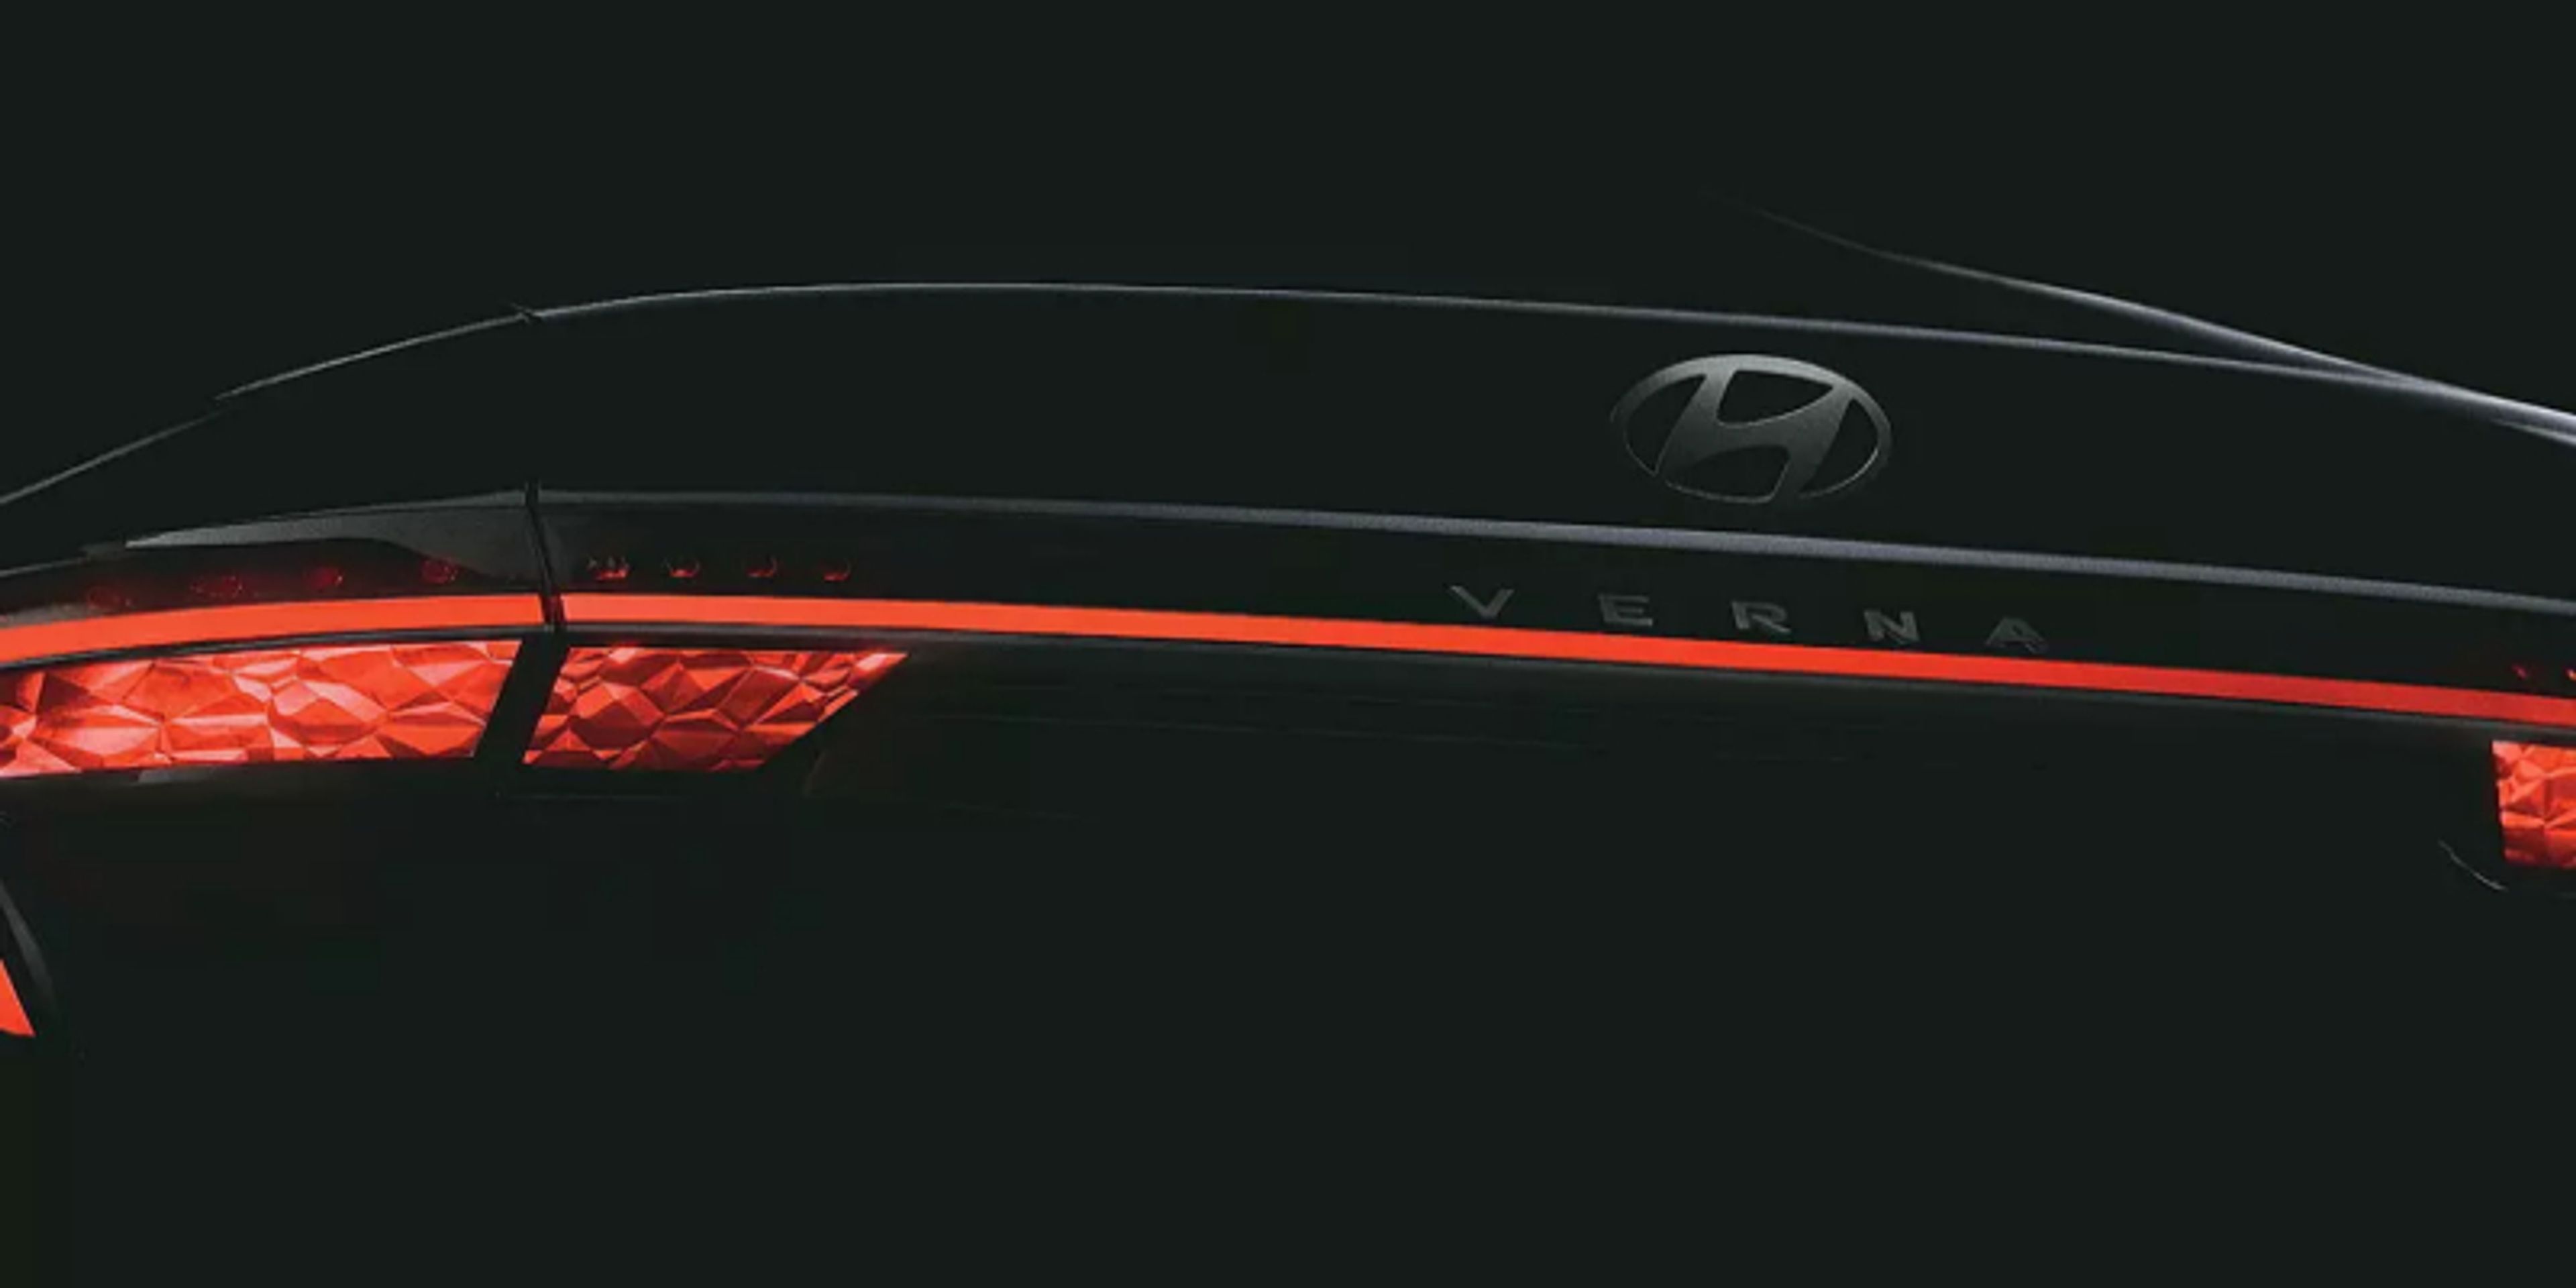 New-gen Hyundai Verna gets a launch date, production commences